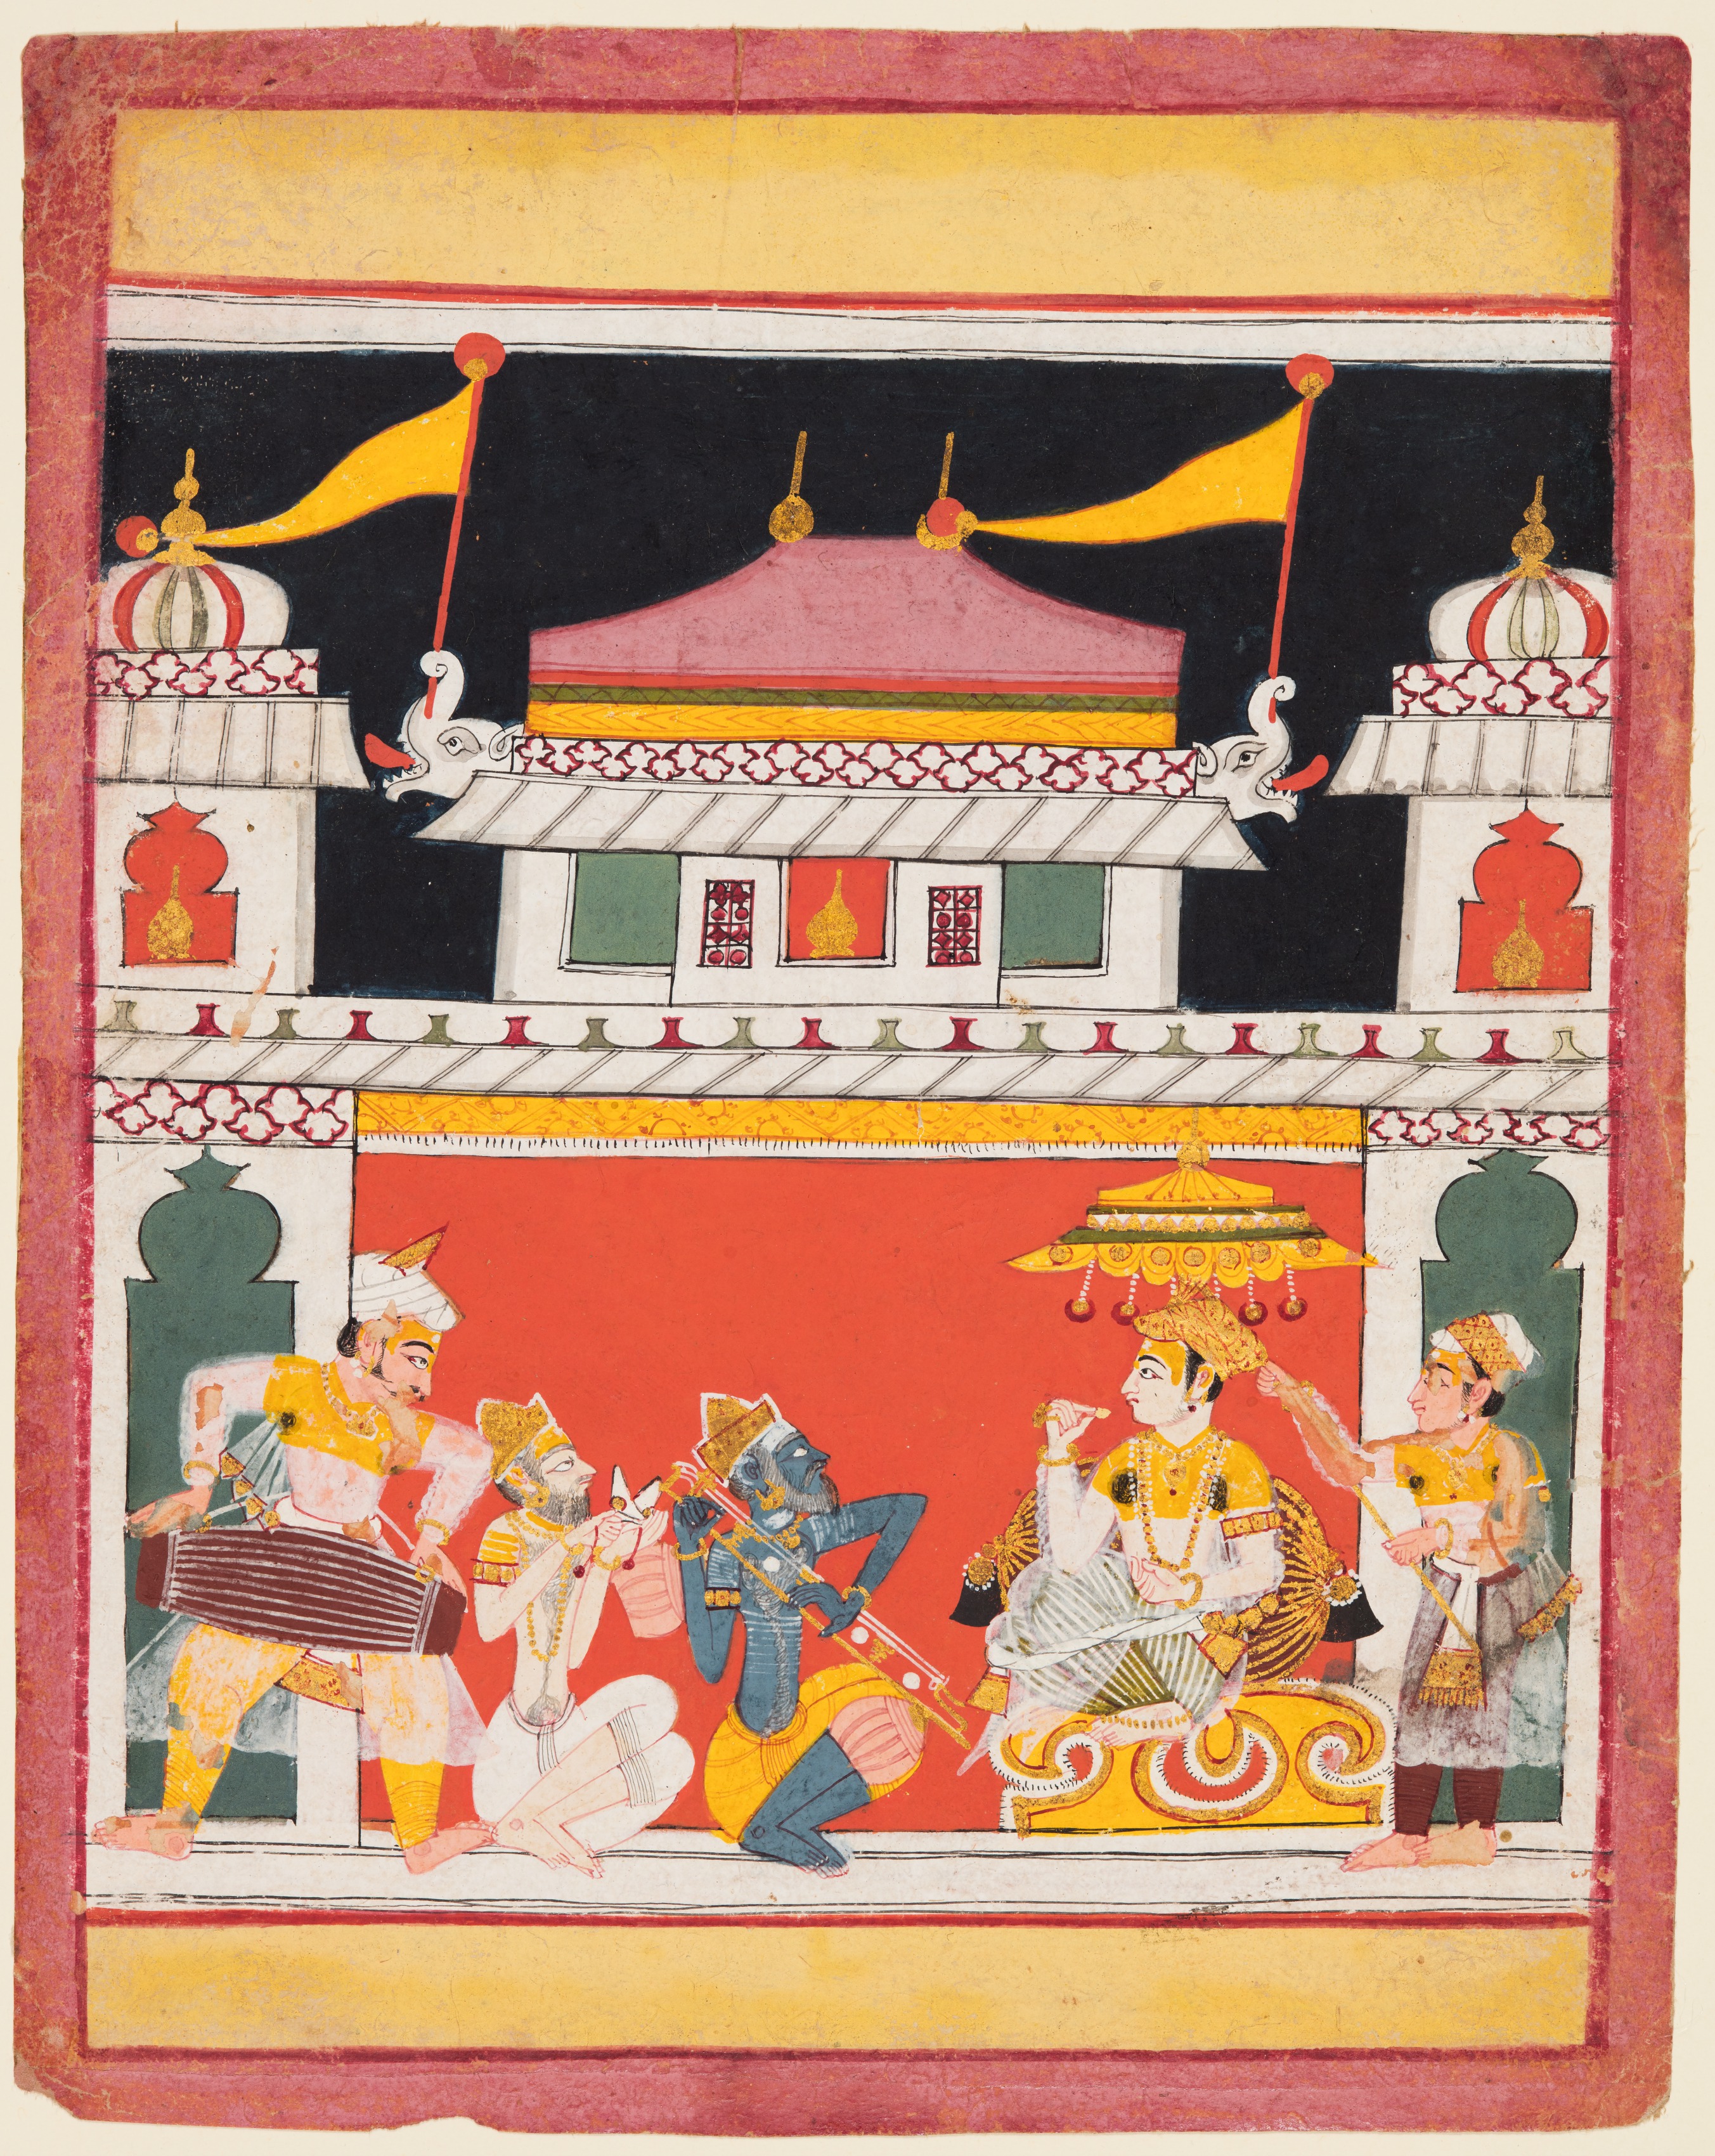 Three Musicians Perform Before a King: Shri Raga, from a Ragamala